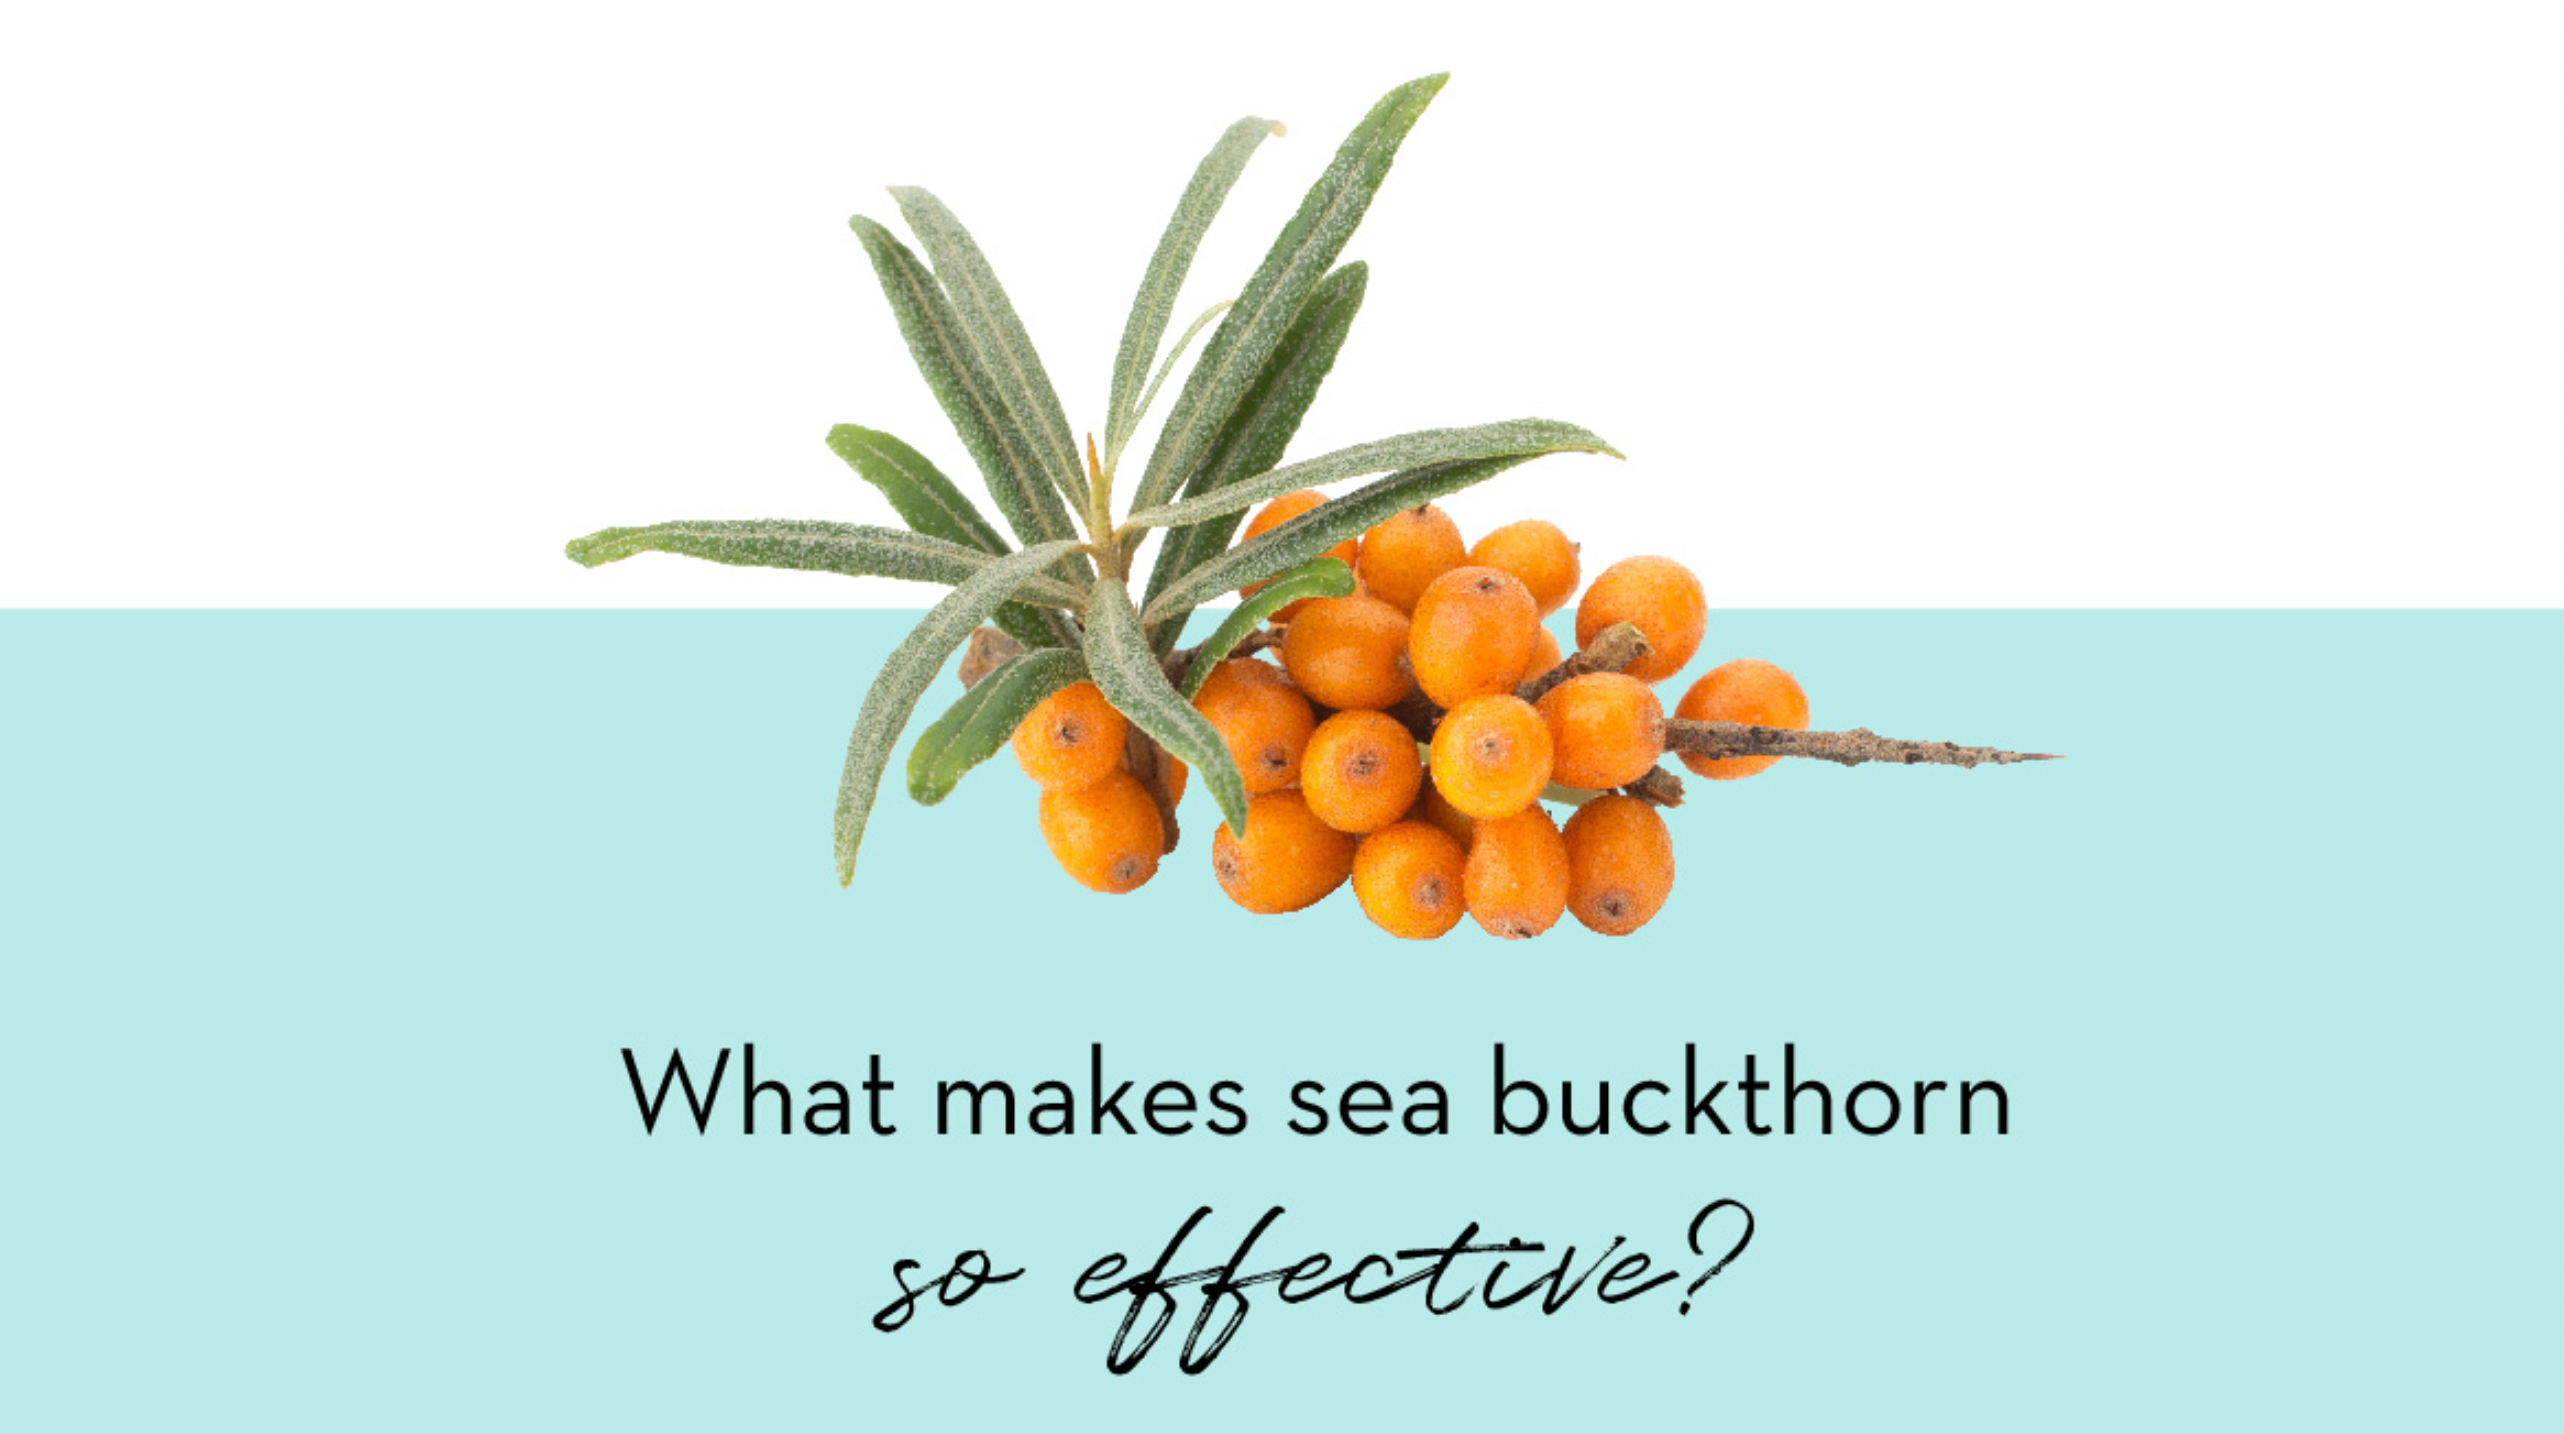 ic:sea buckthorn oil for stretch mark treatment